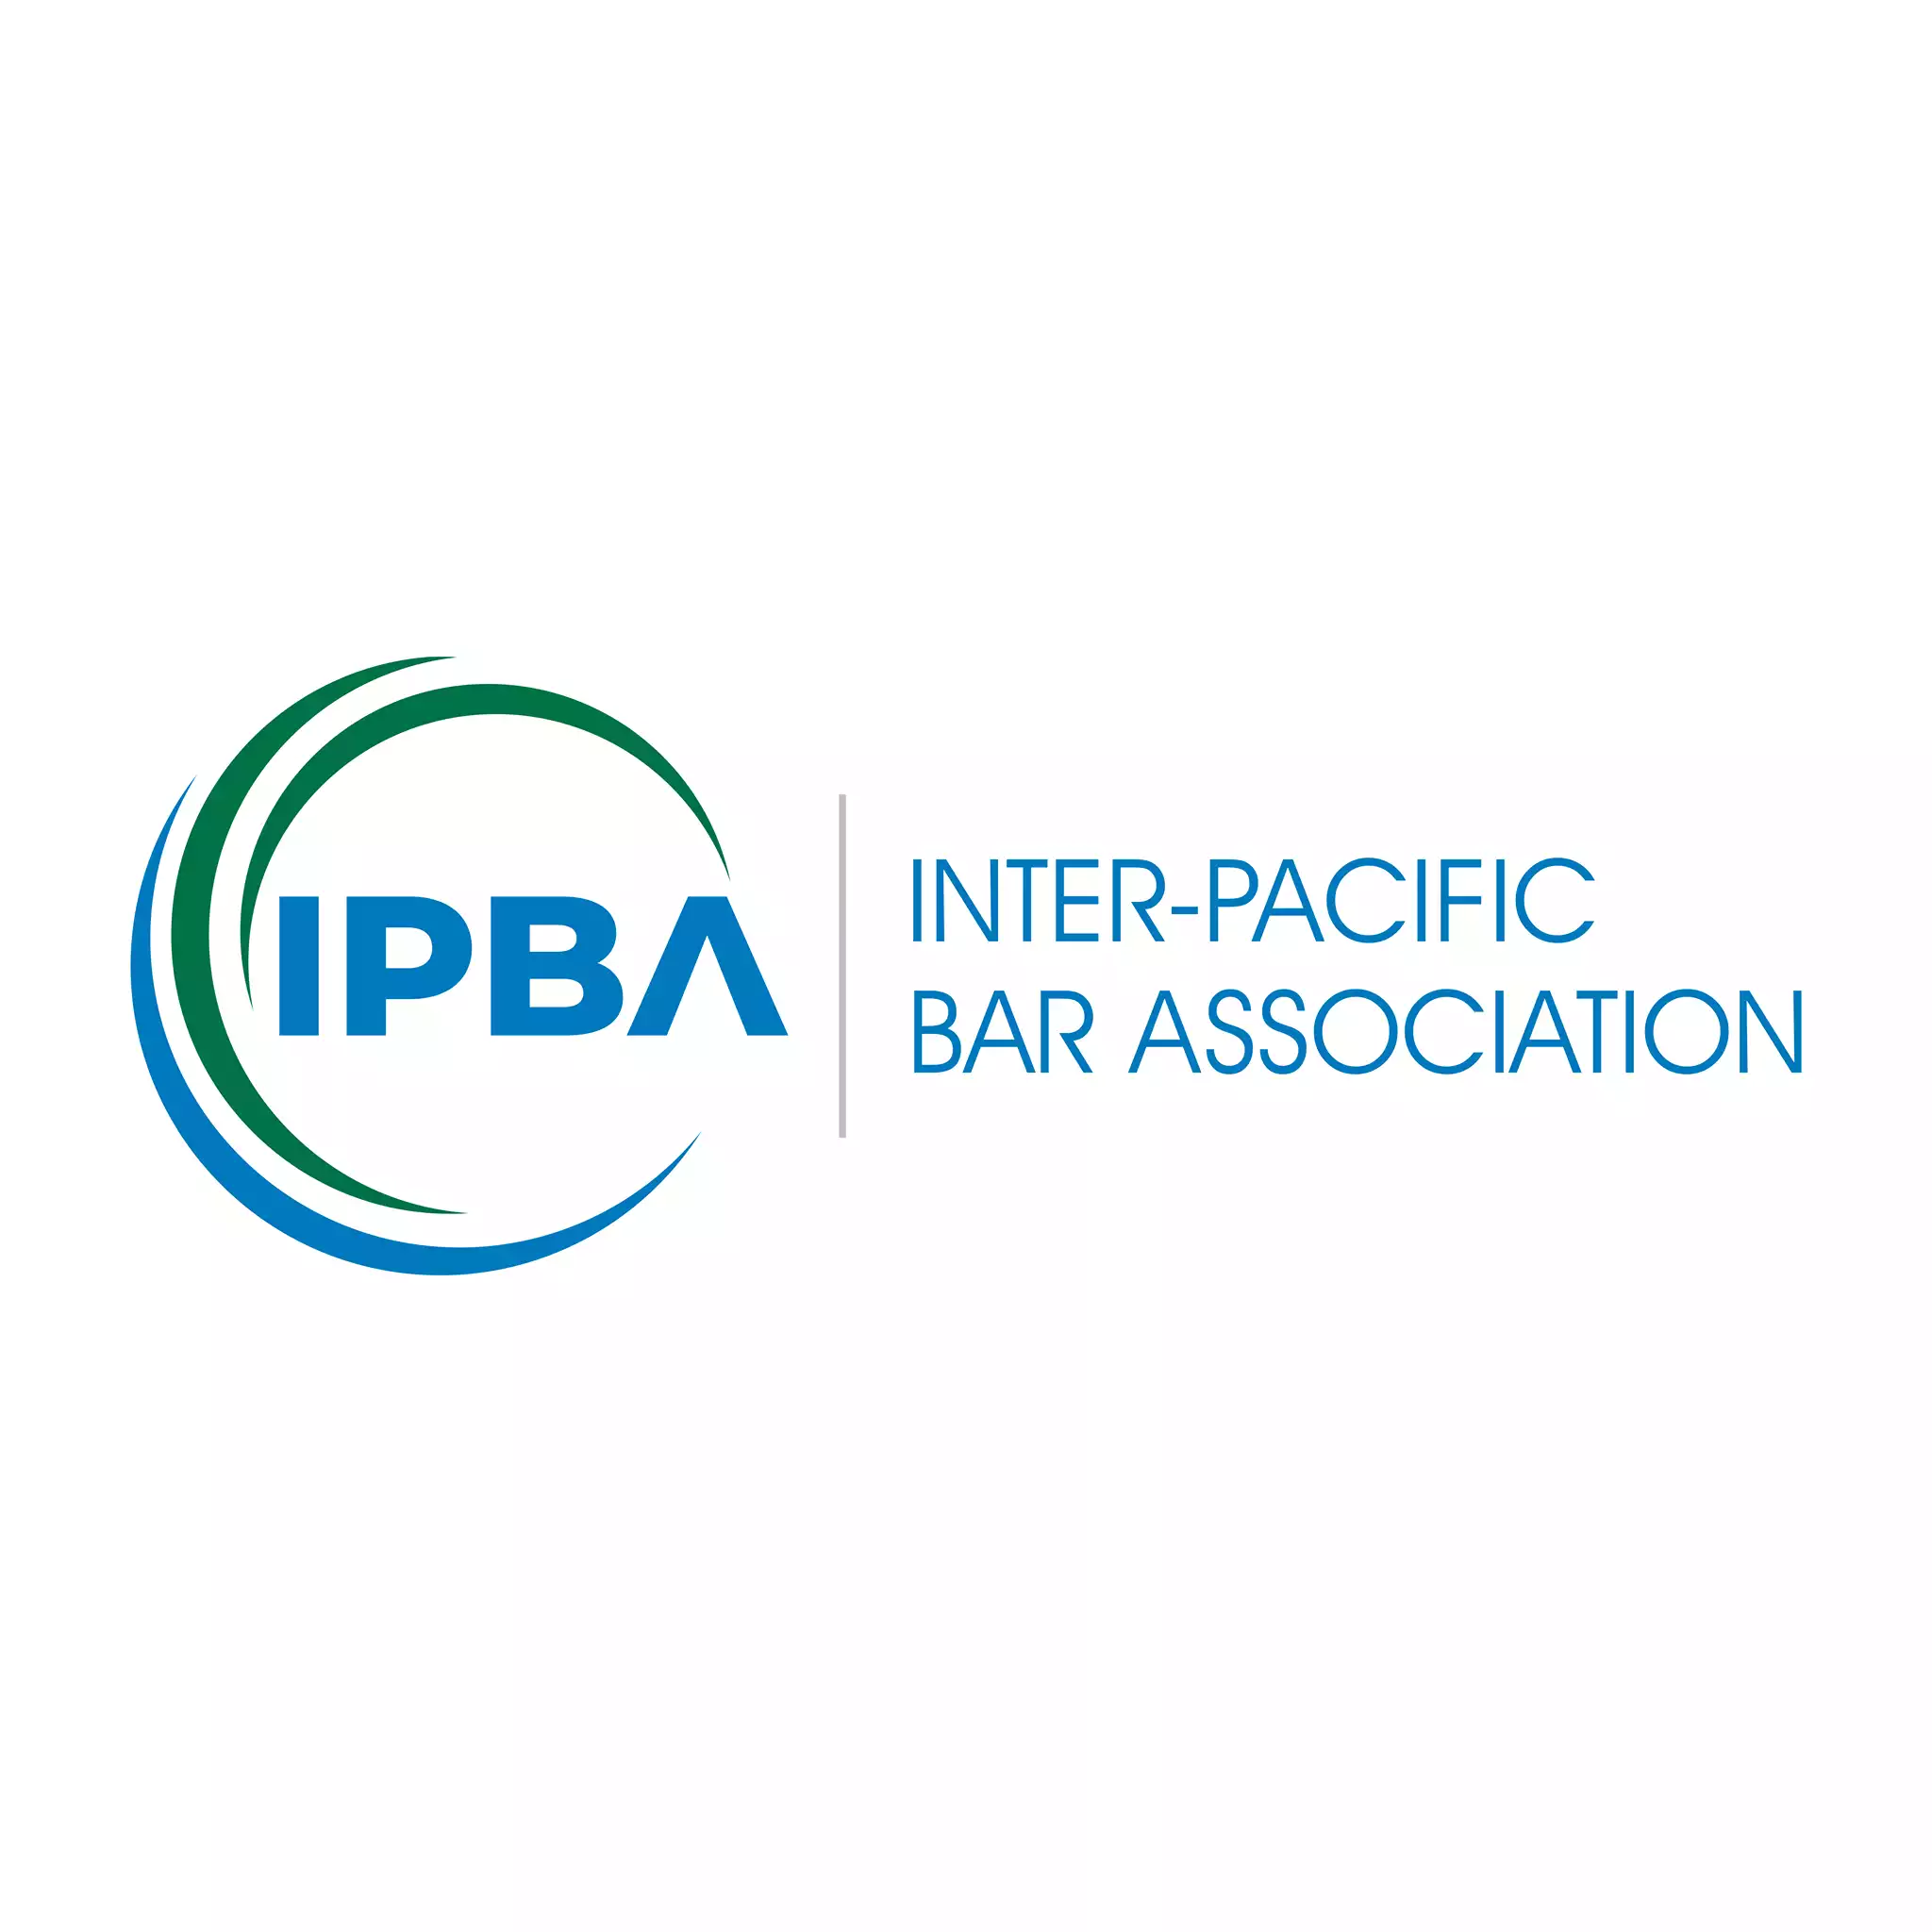 Inter-Pacific Bar Association Scholarship programs